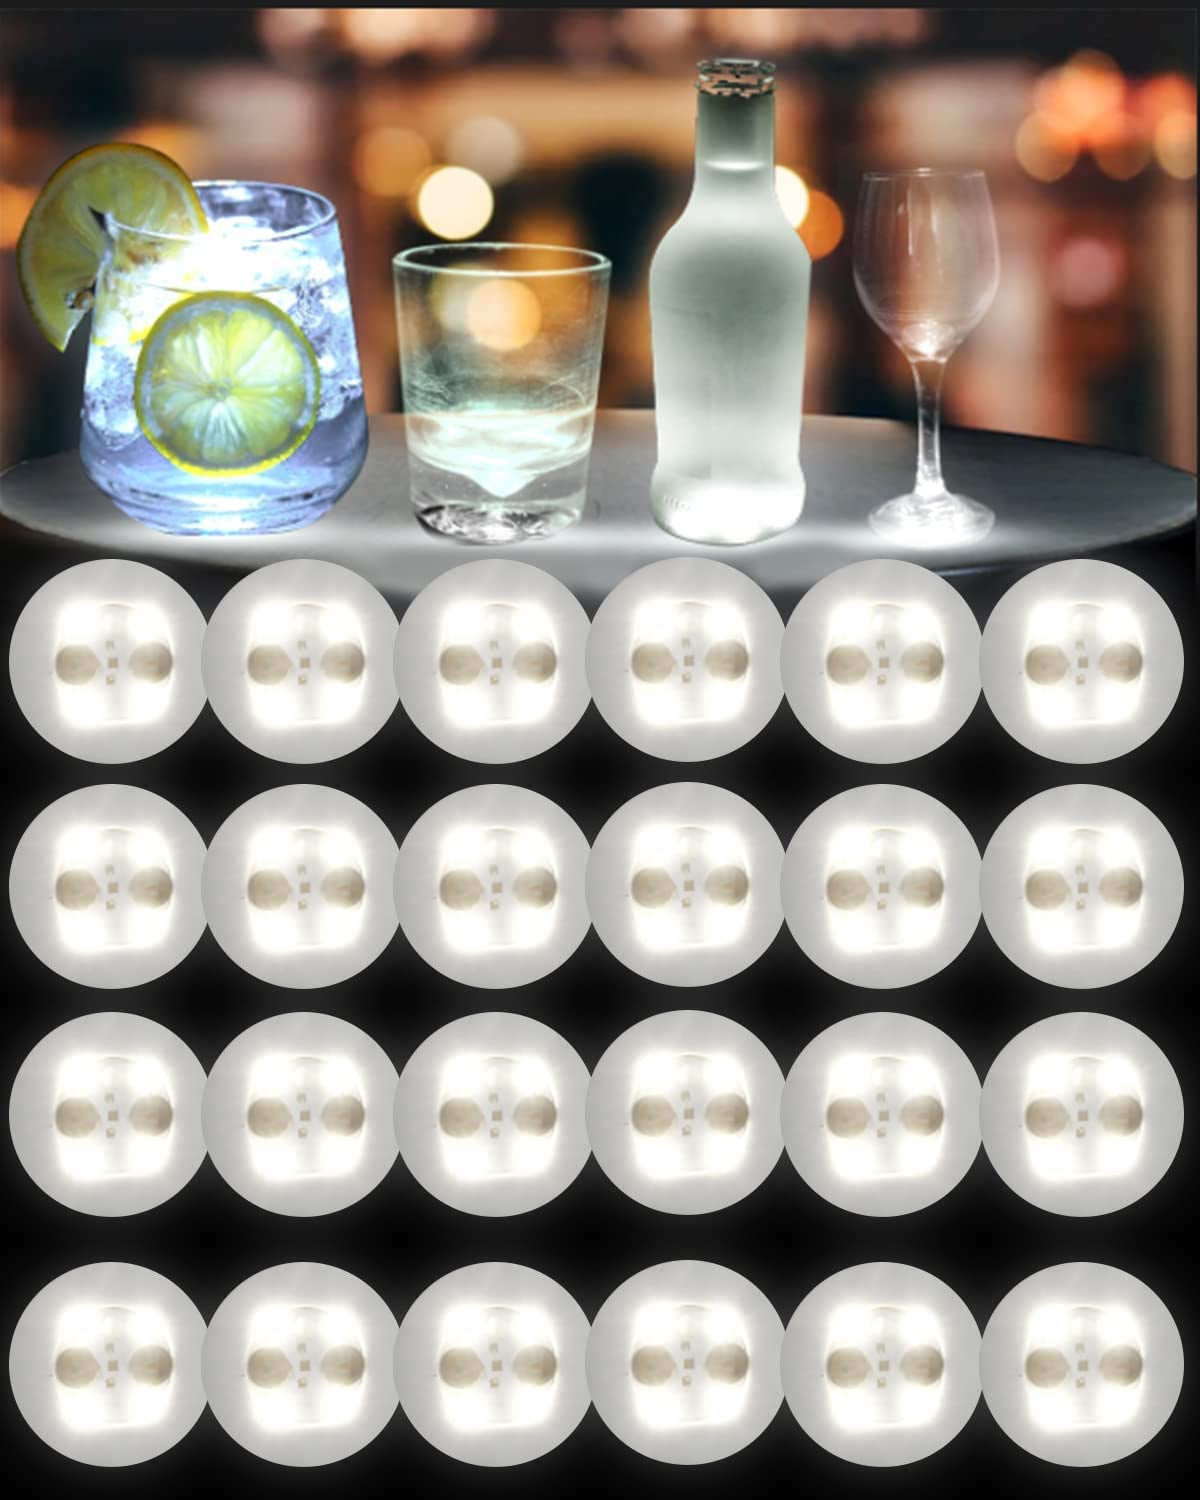 LOGUIDE LED Coaster,Light up Coasters,Led Bottle Lights, Bottle Glorifier,Led Sticker Coaster Discs Light up for Drinks,Flash Light up Cup Coaster Flashing Shots Light (Cool-White)